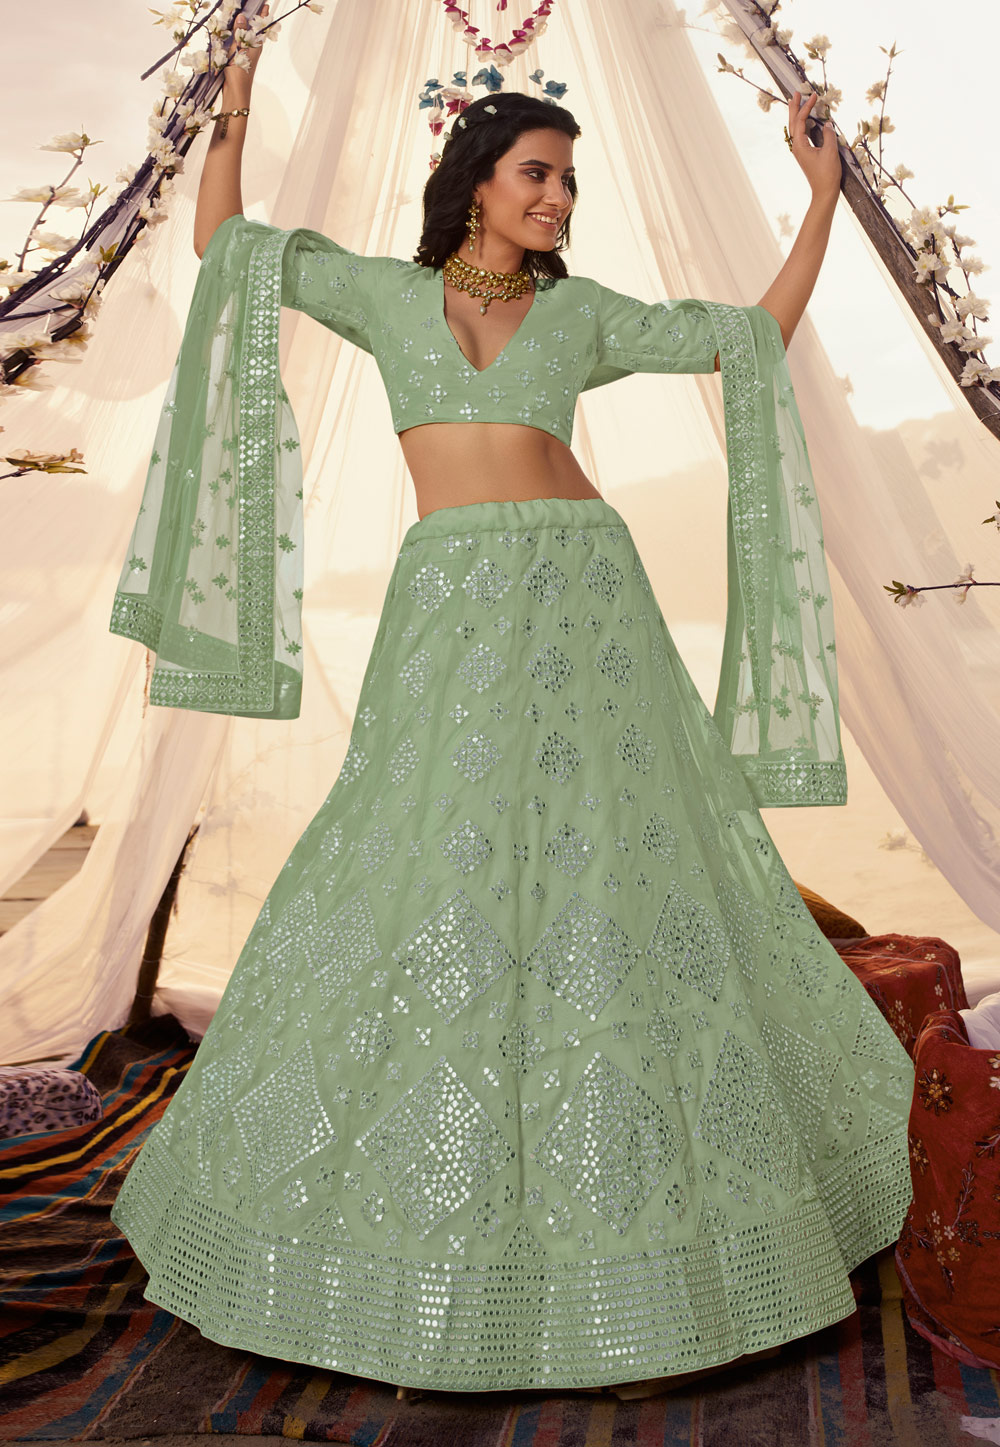 Buy Readymade Bridal, Wedding Lehenga Online | Ghagra Choli Online at Pothys-bdsngoinhaviet.com.vn